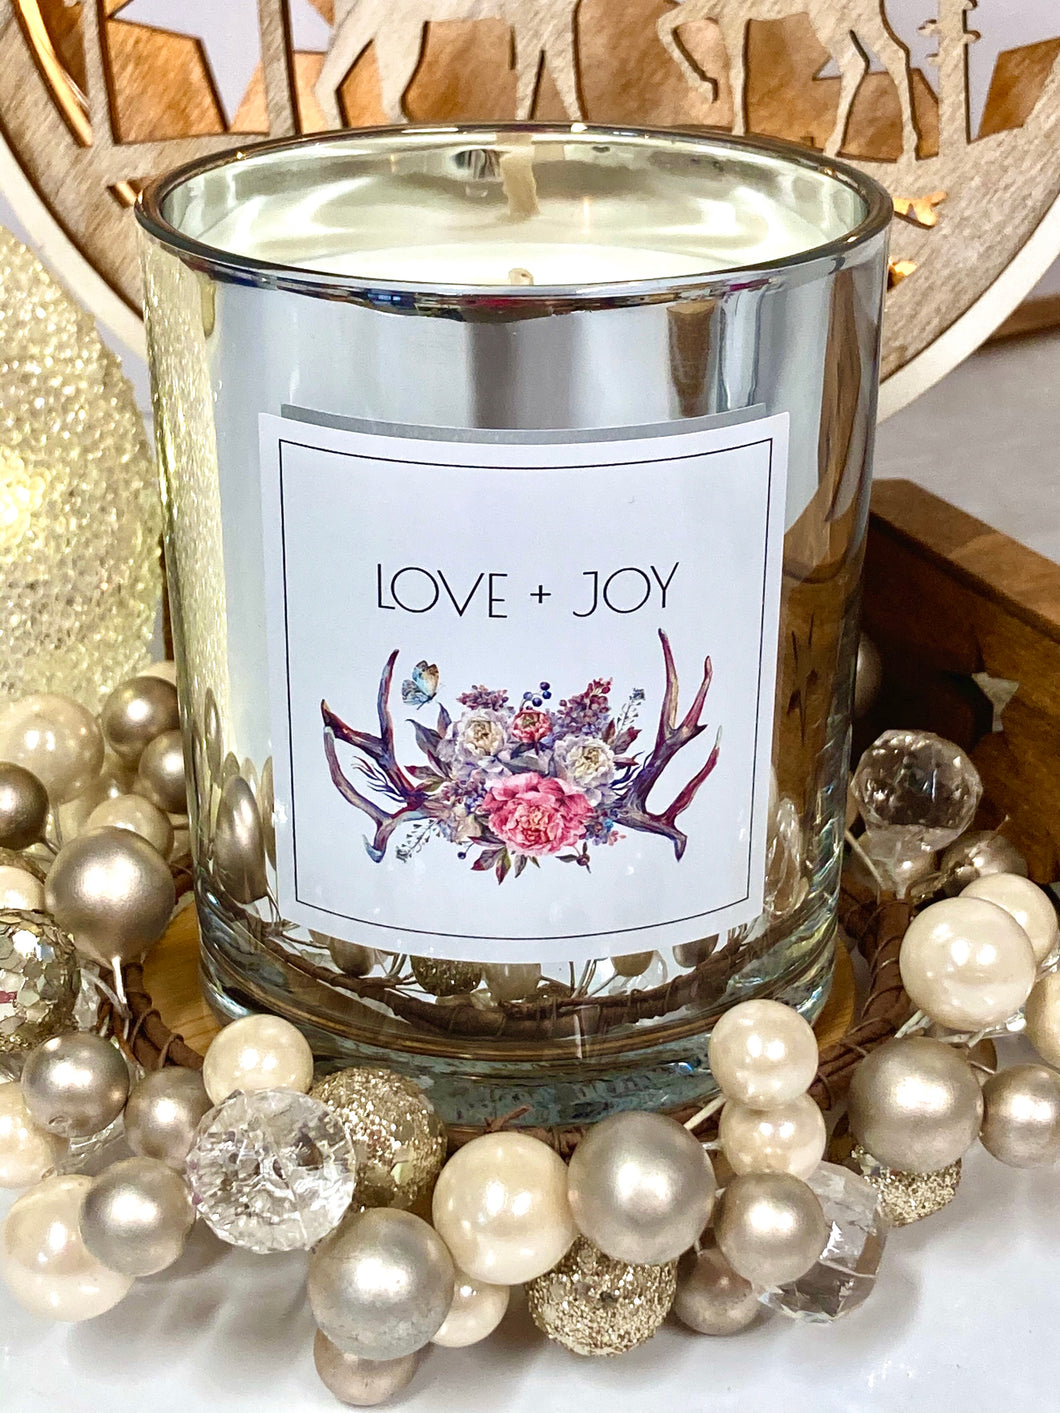 Love + Joy - White Christmas